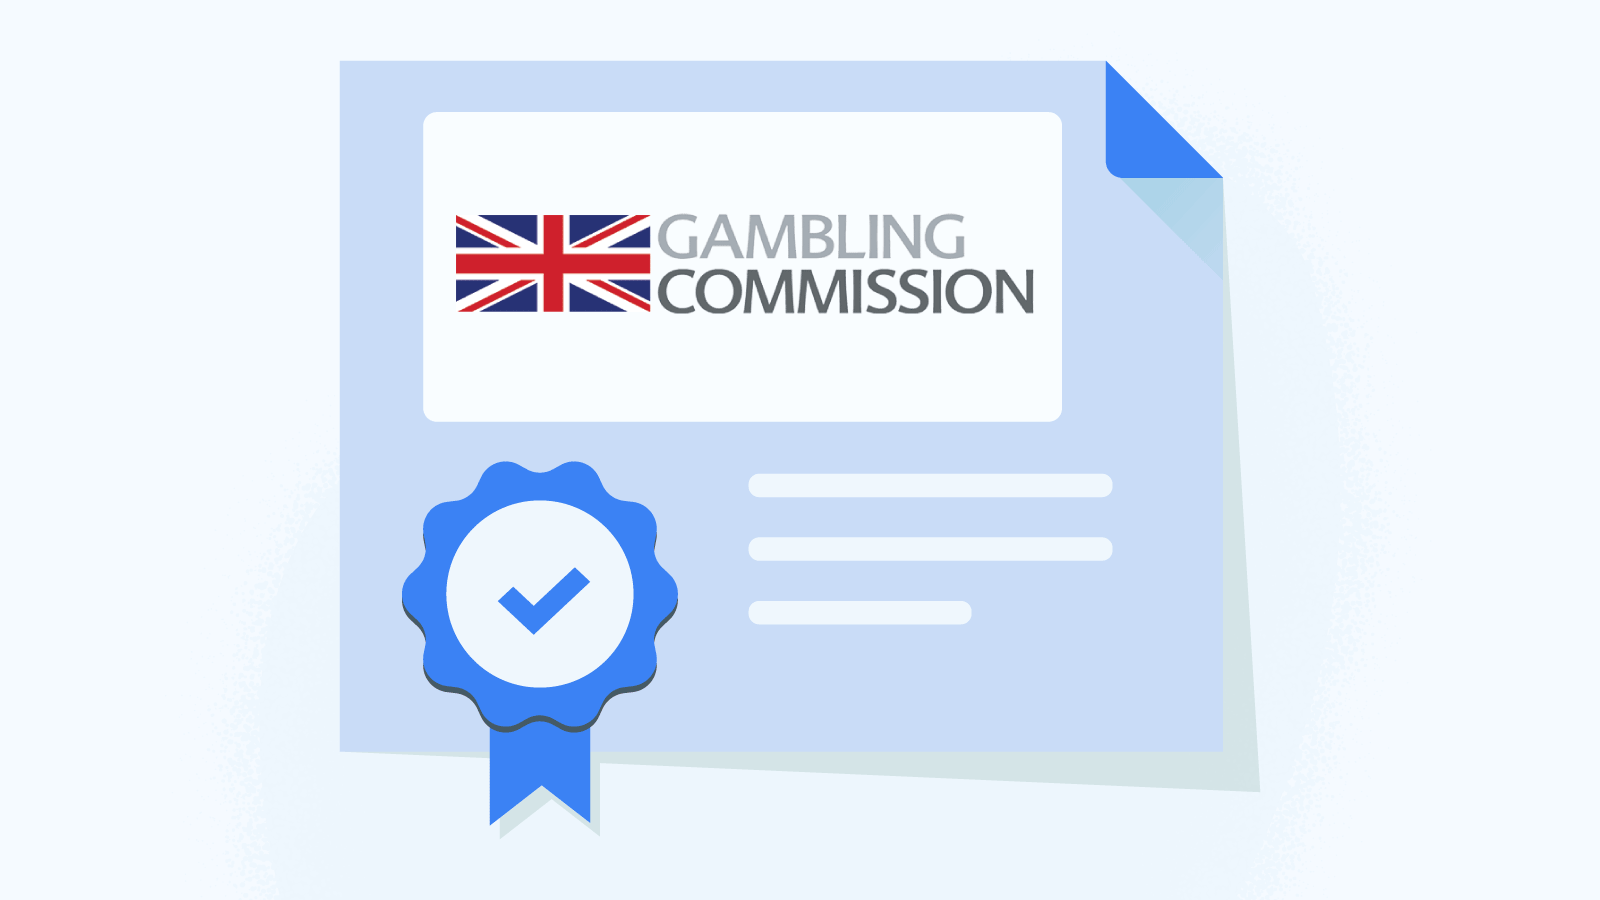 The United Kingdom Gambling Commission